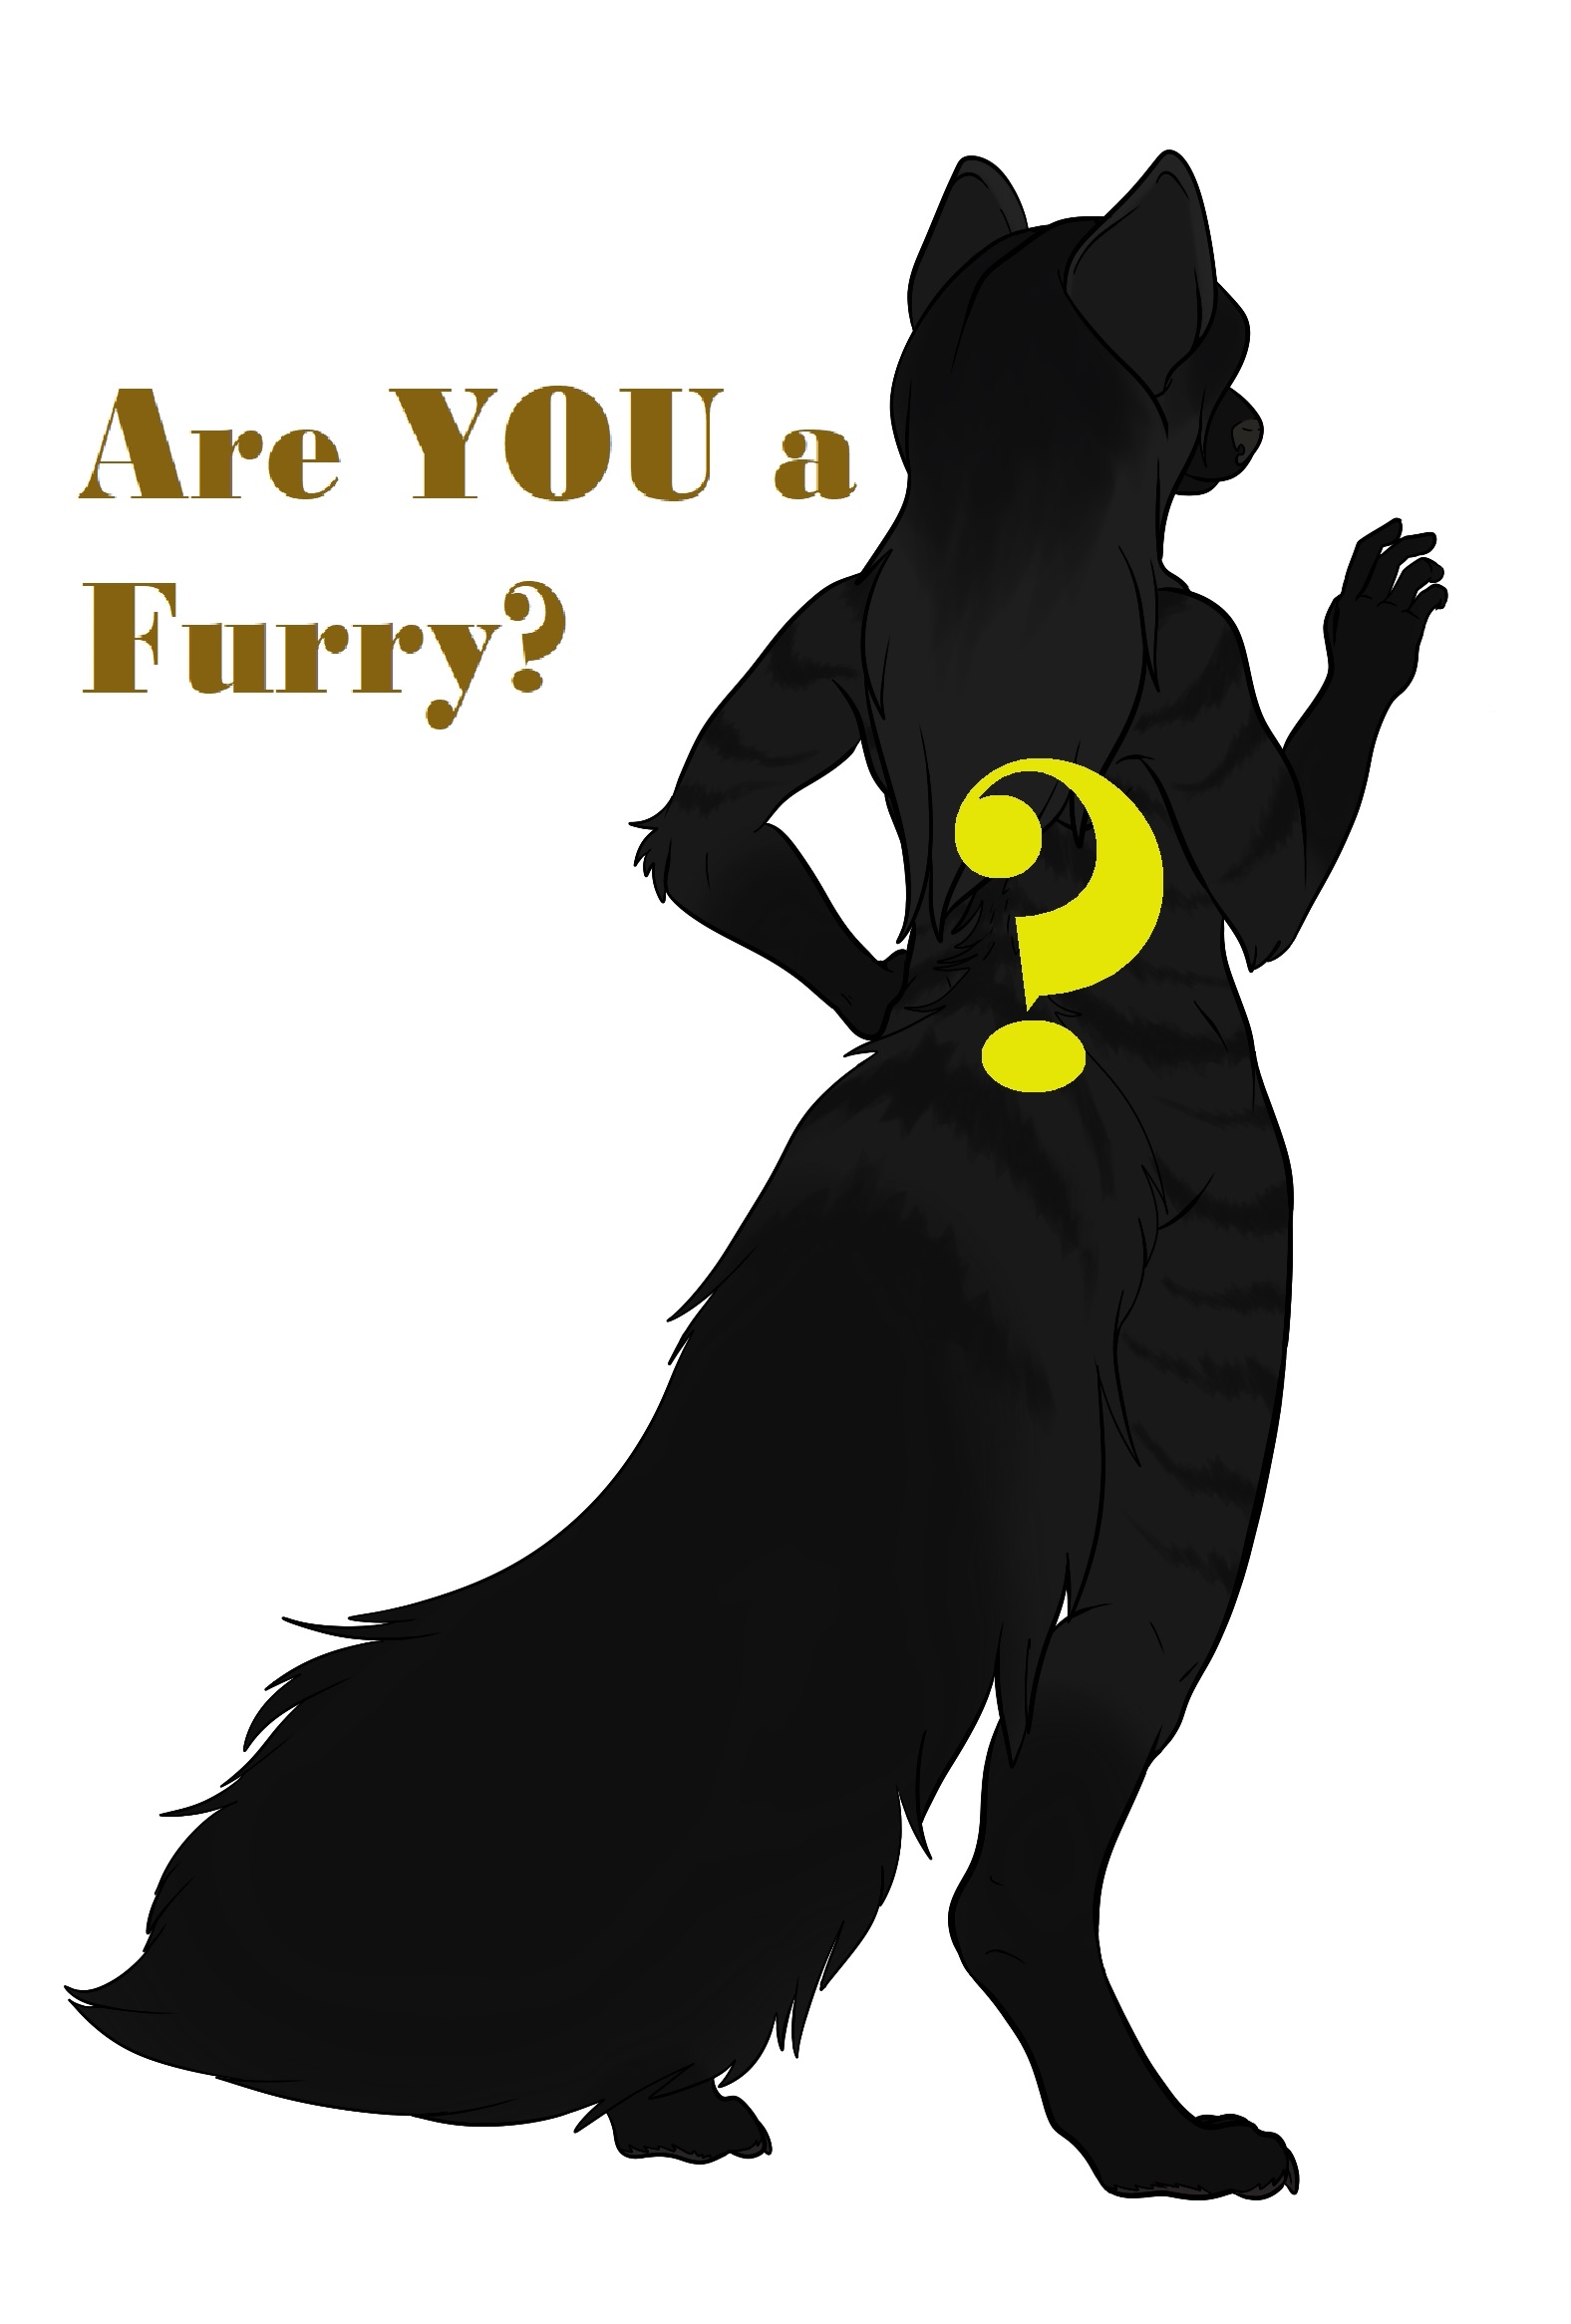 Furry test quiz